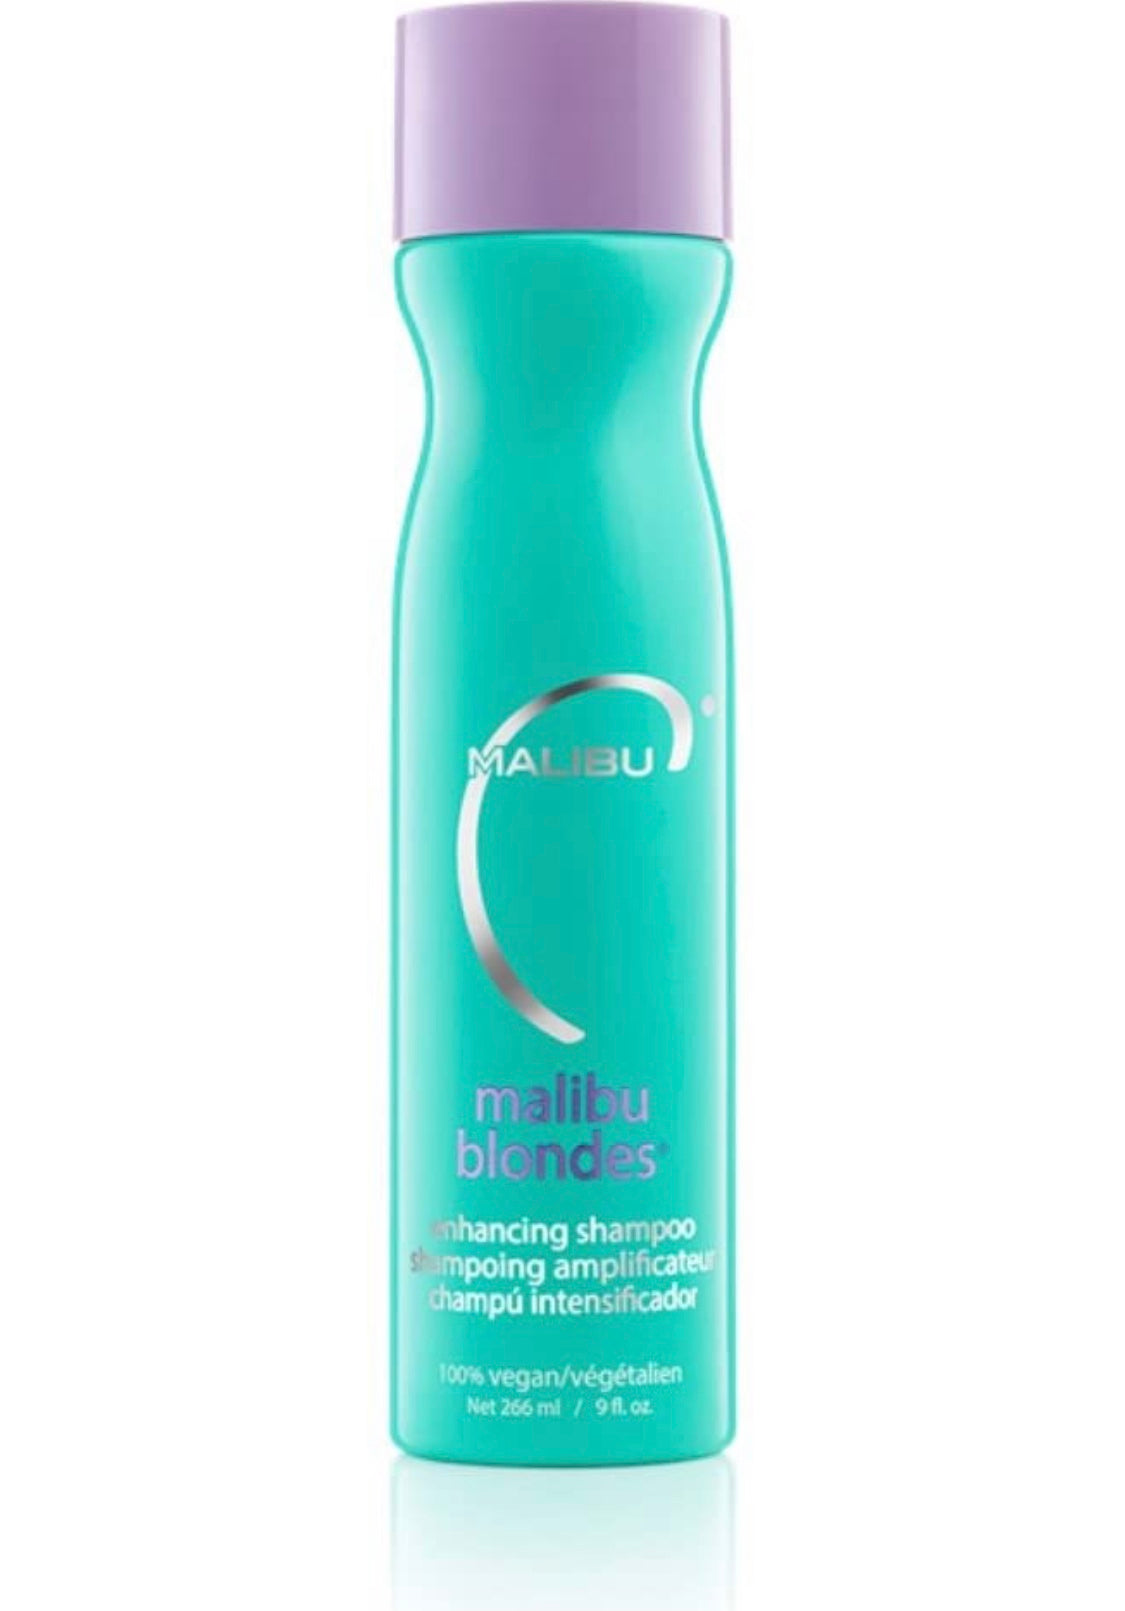 Malibu - Blondes shampoo 9 fl. oz./ 266 ml